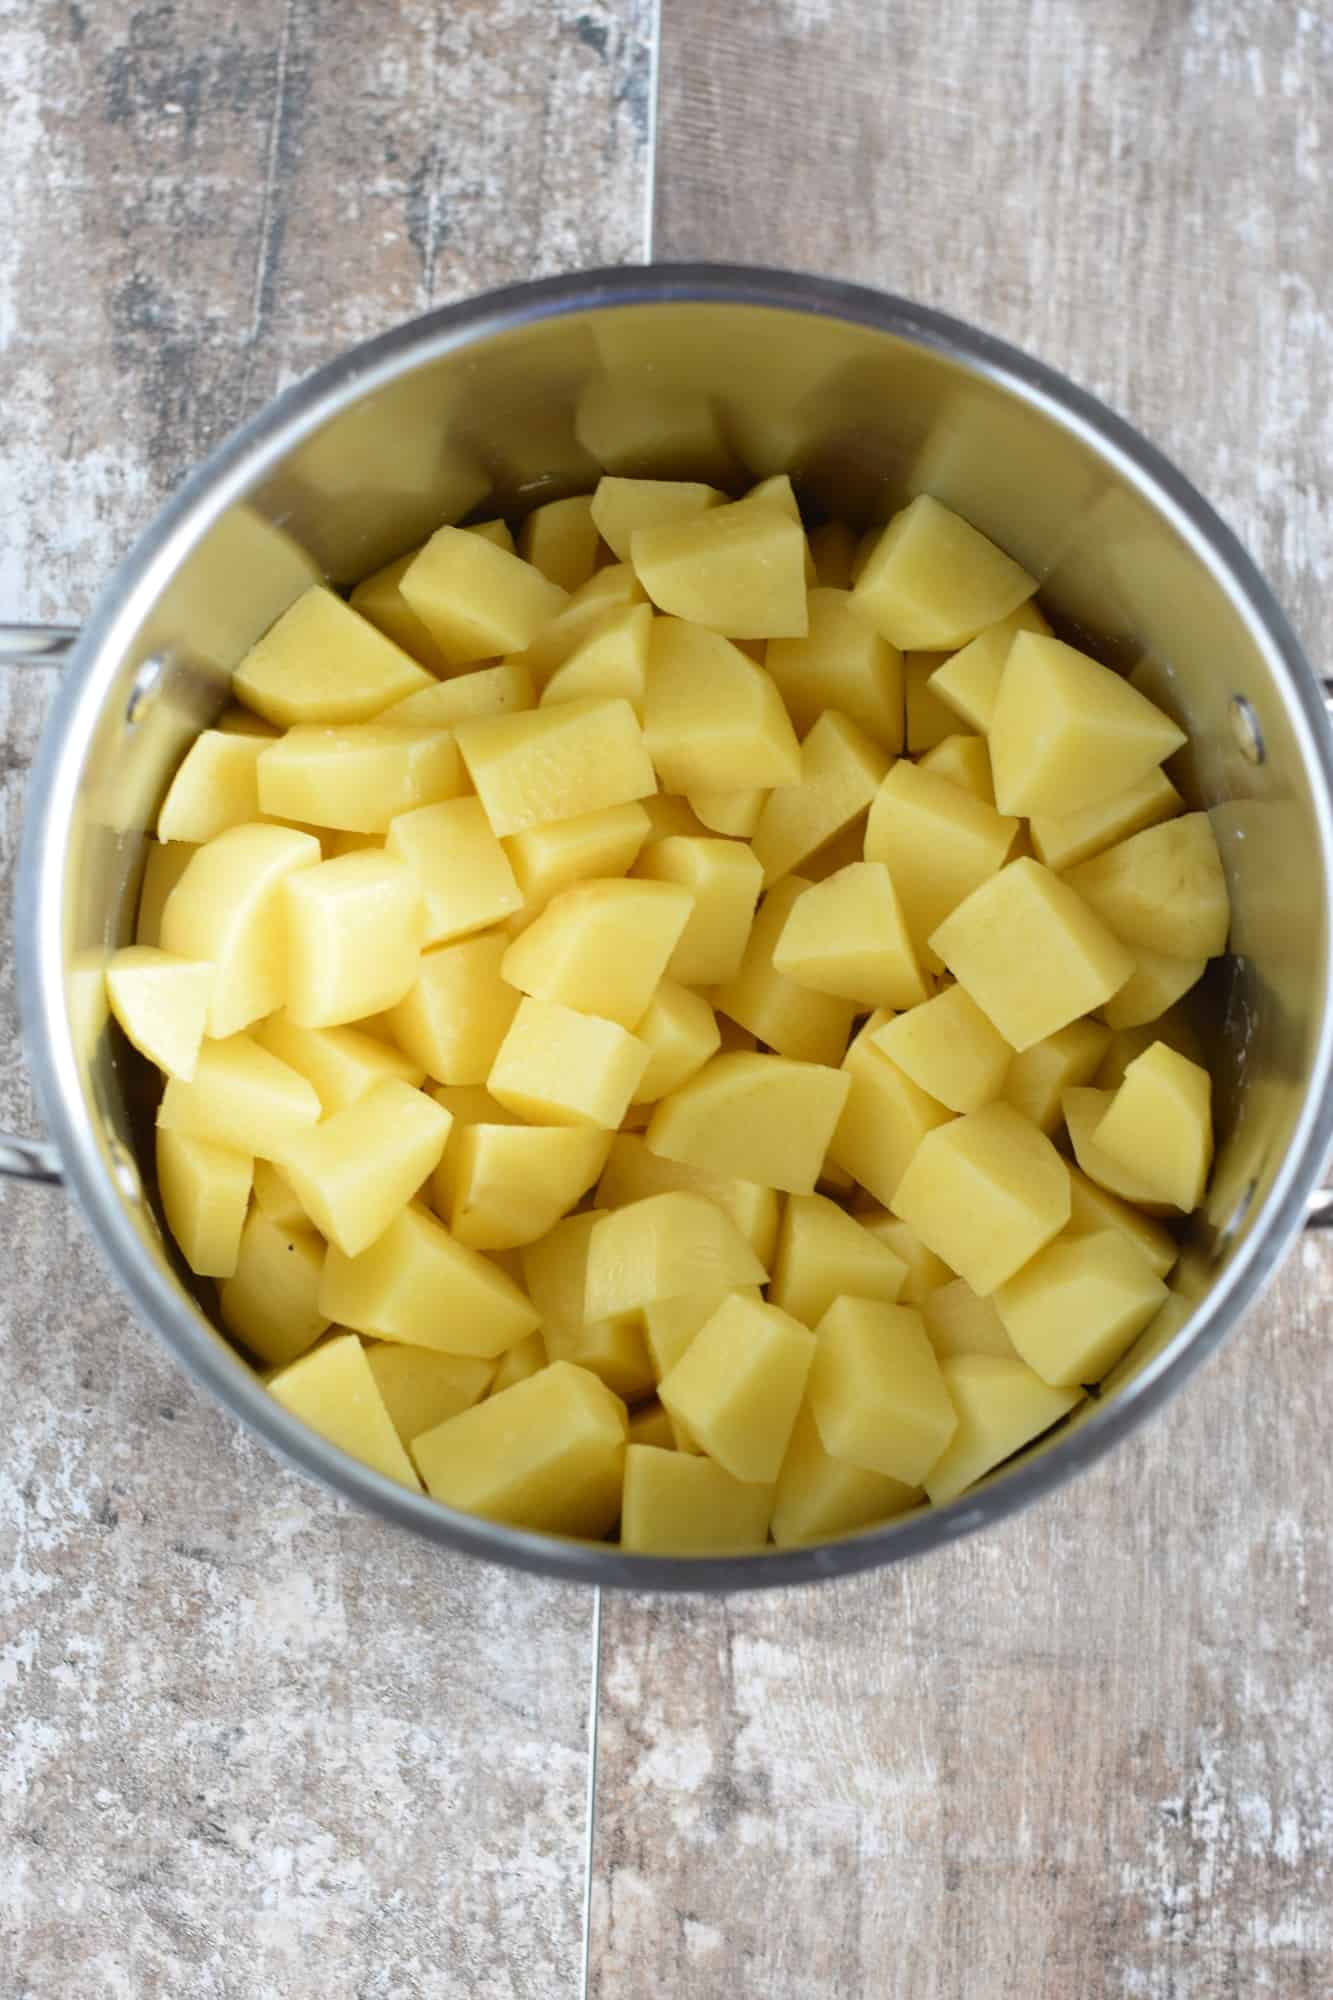 cut potatoes added to a pot